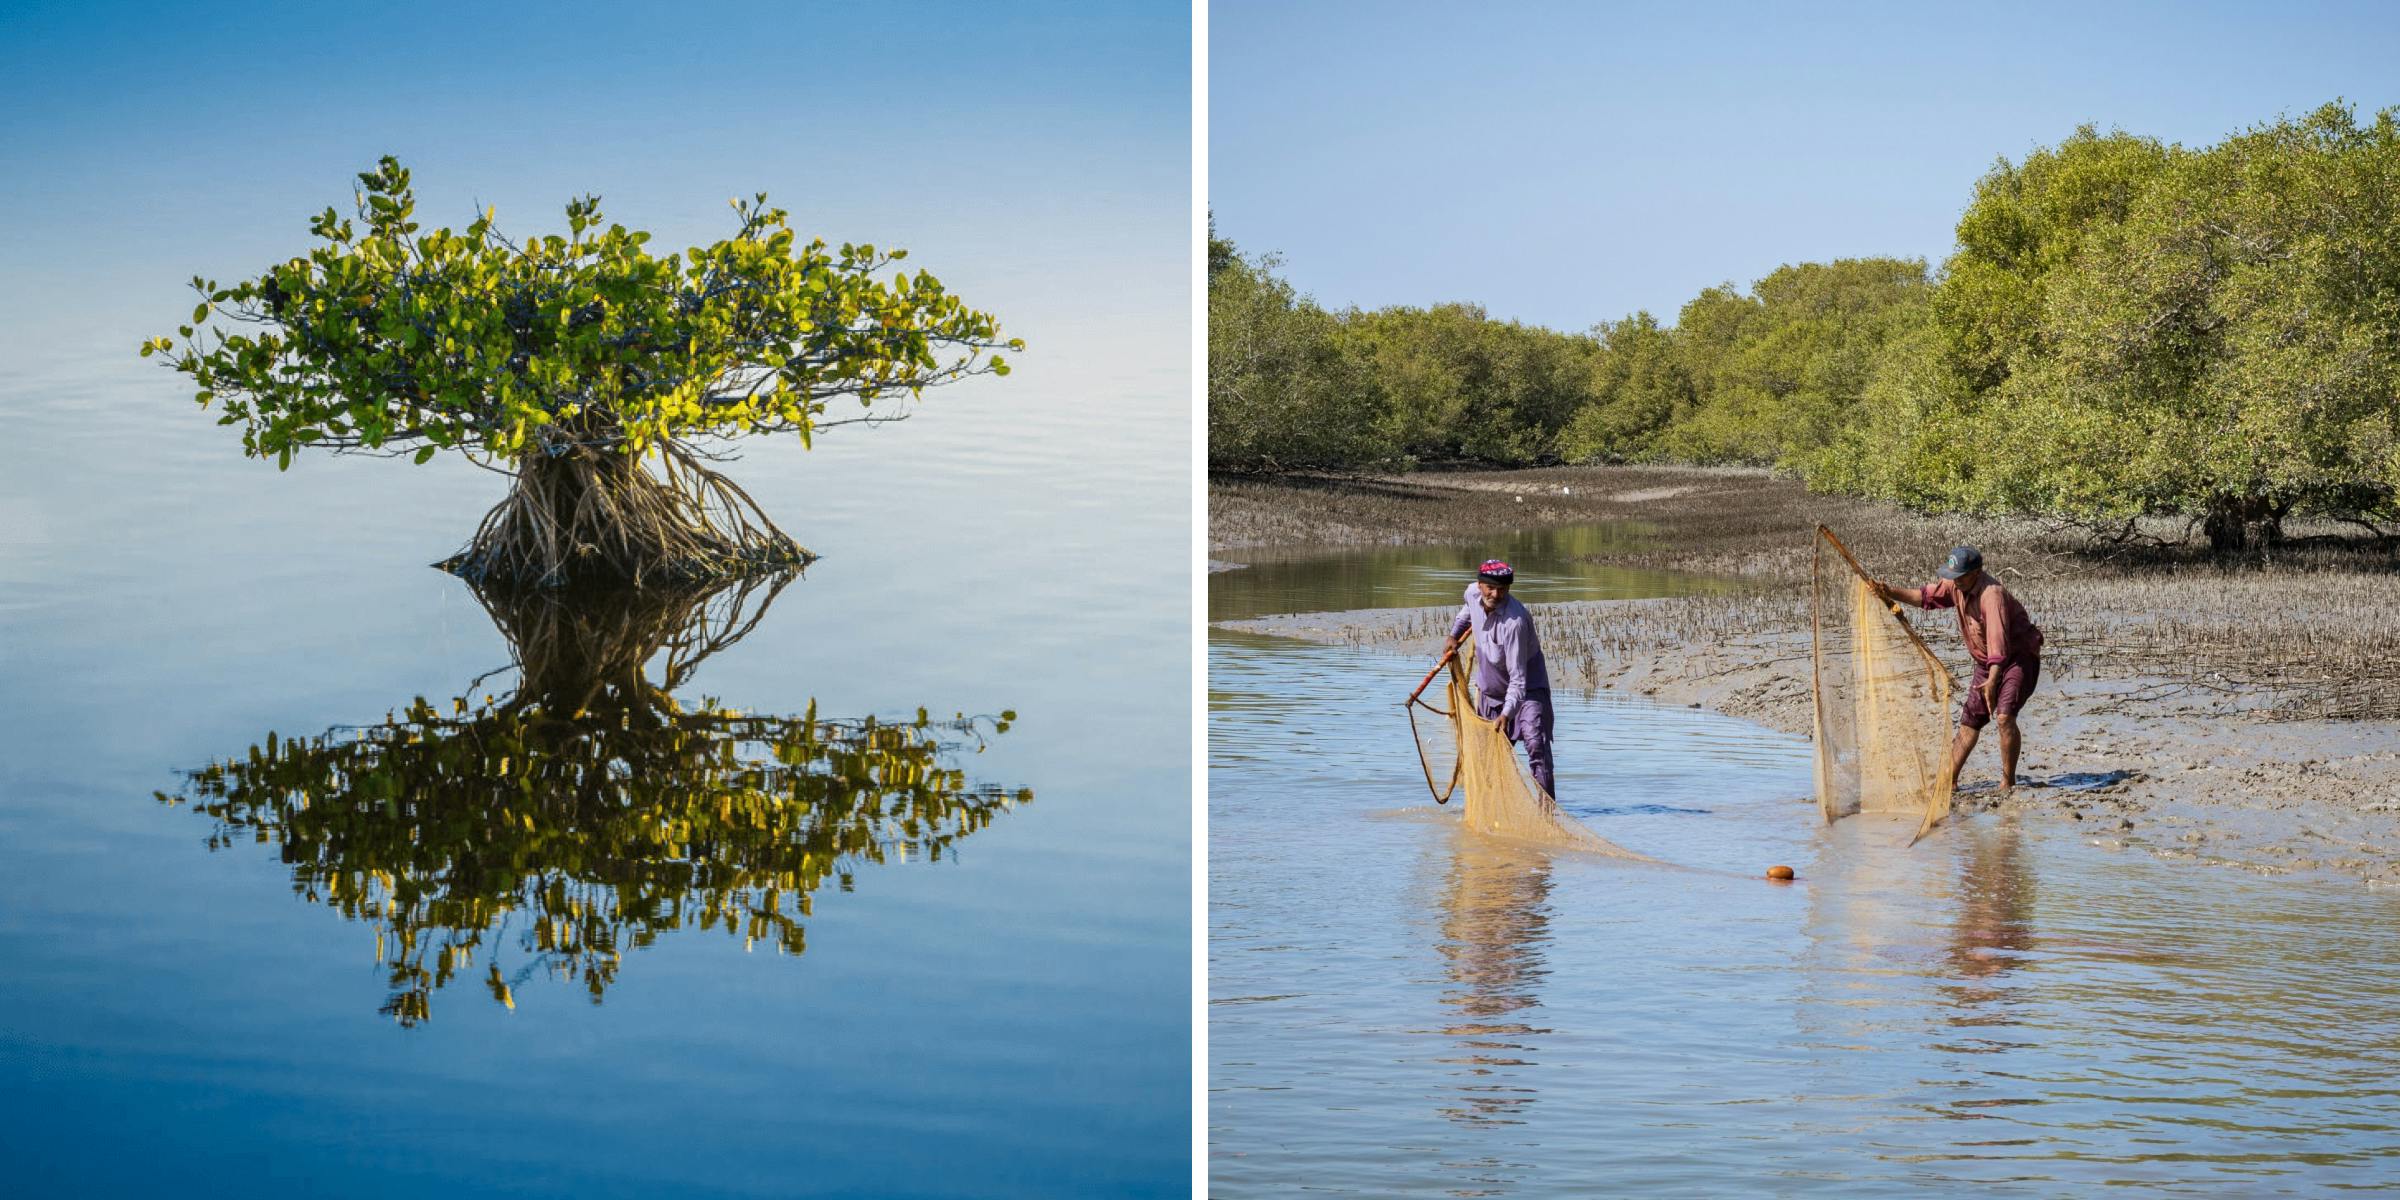 Delta Blue Carbon images – a mangrove restoration project